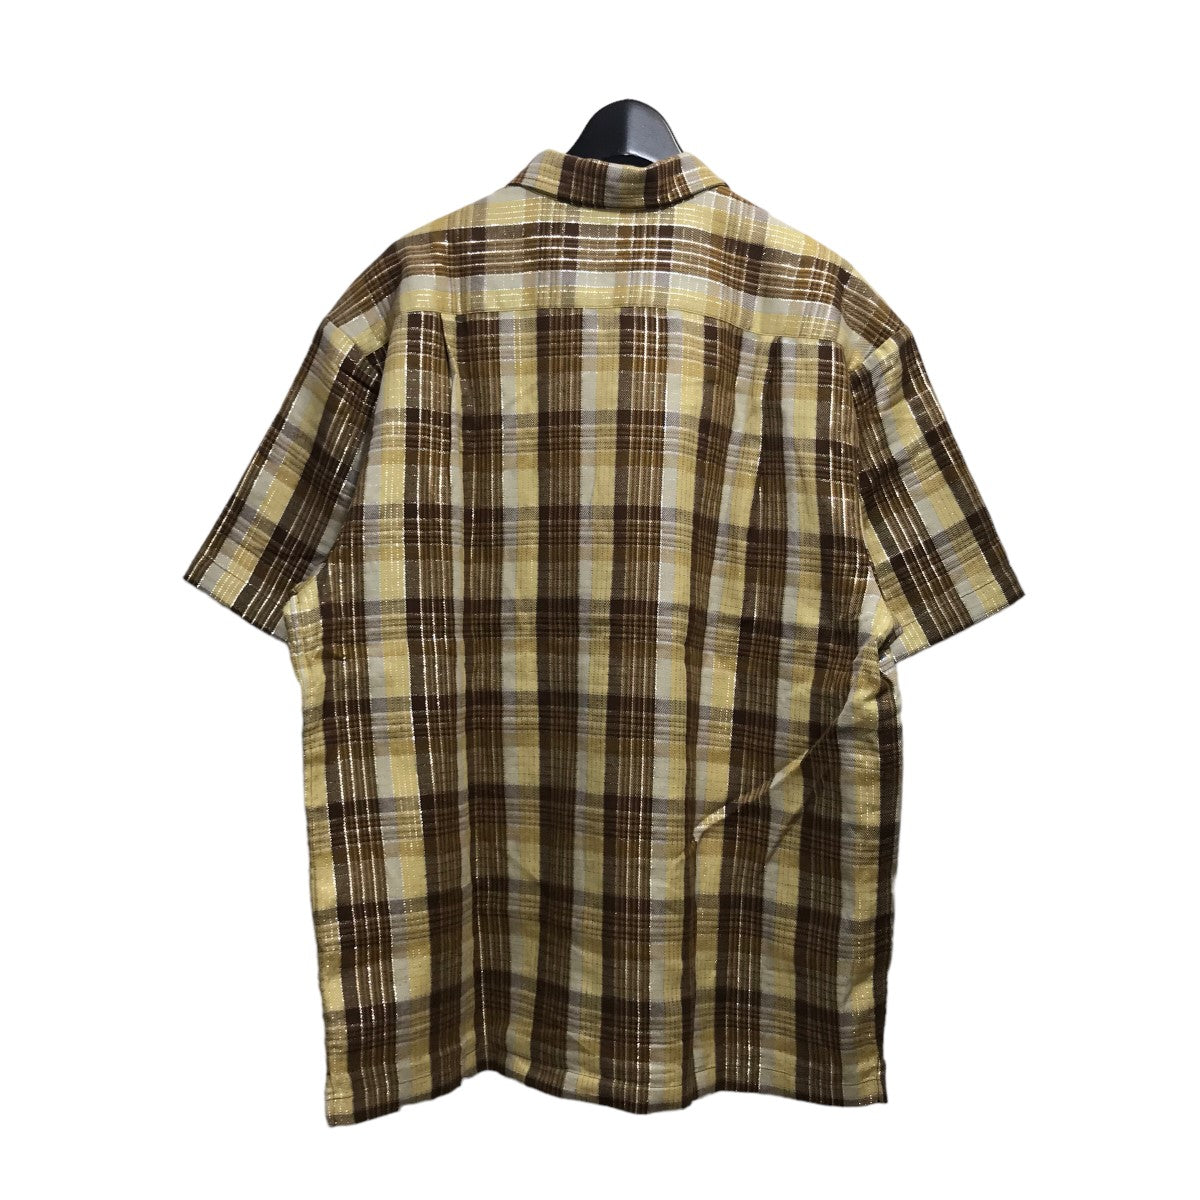 23SSsupreme metallic plaid s s shirt半袖シャツ